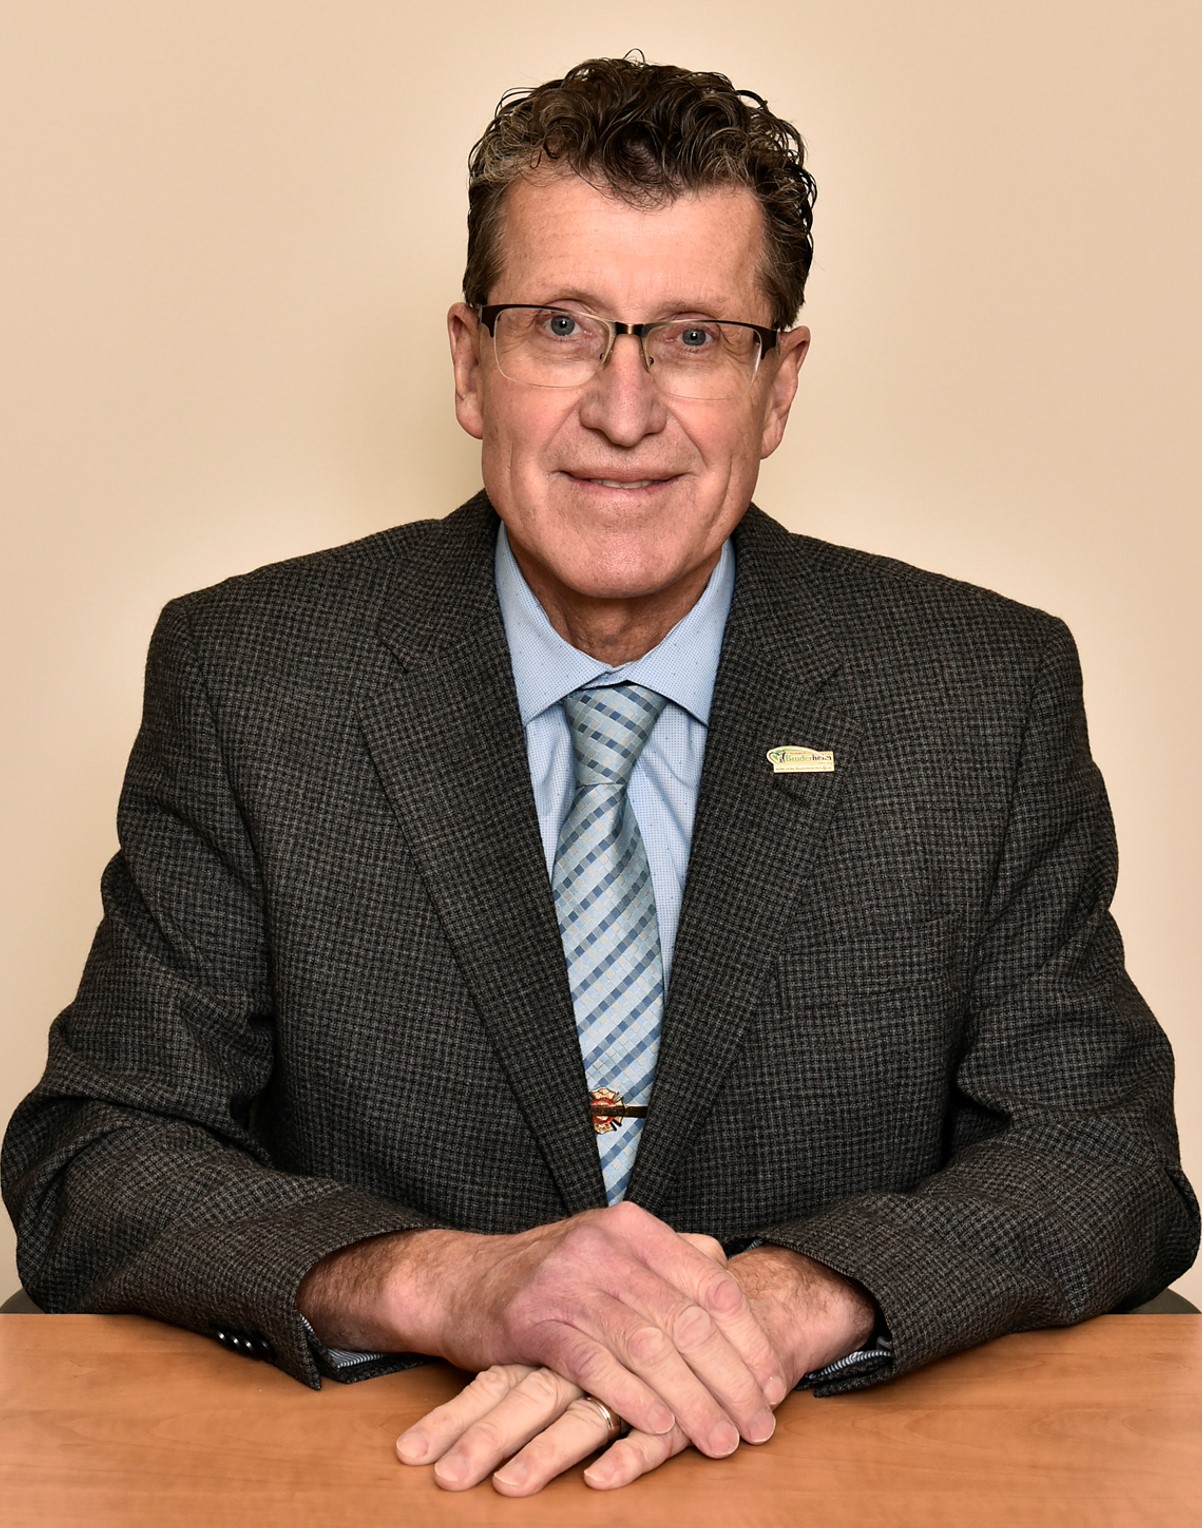 Mayor Karl Hauch